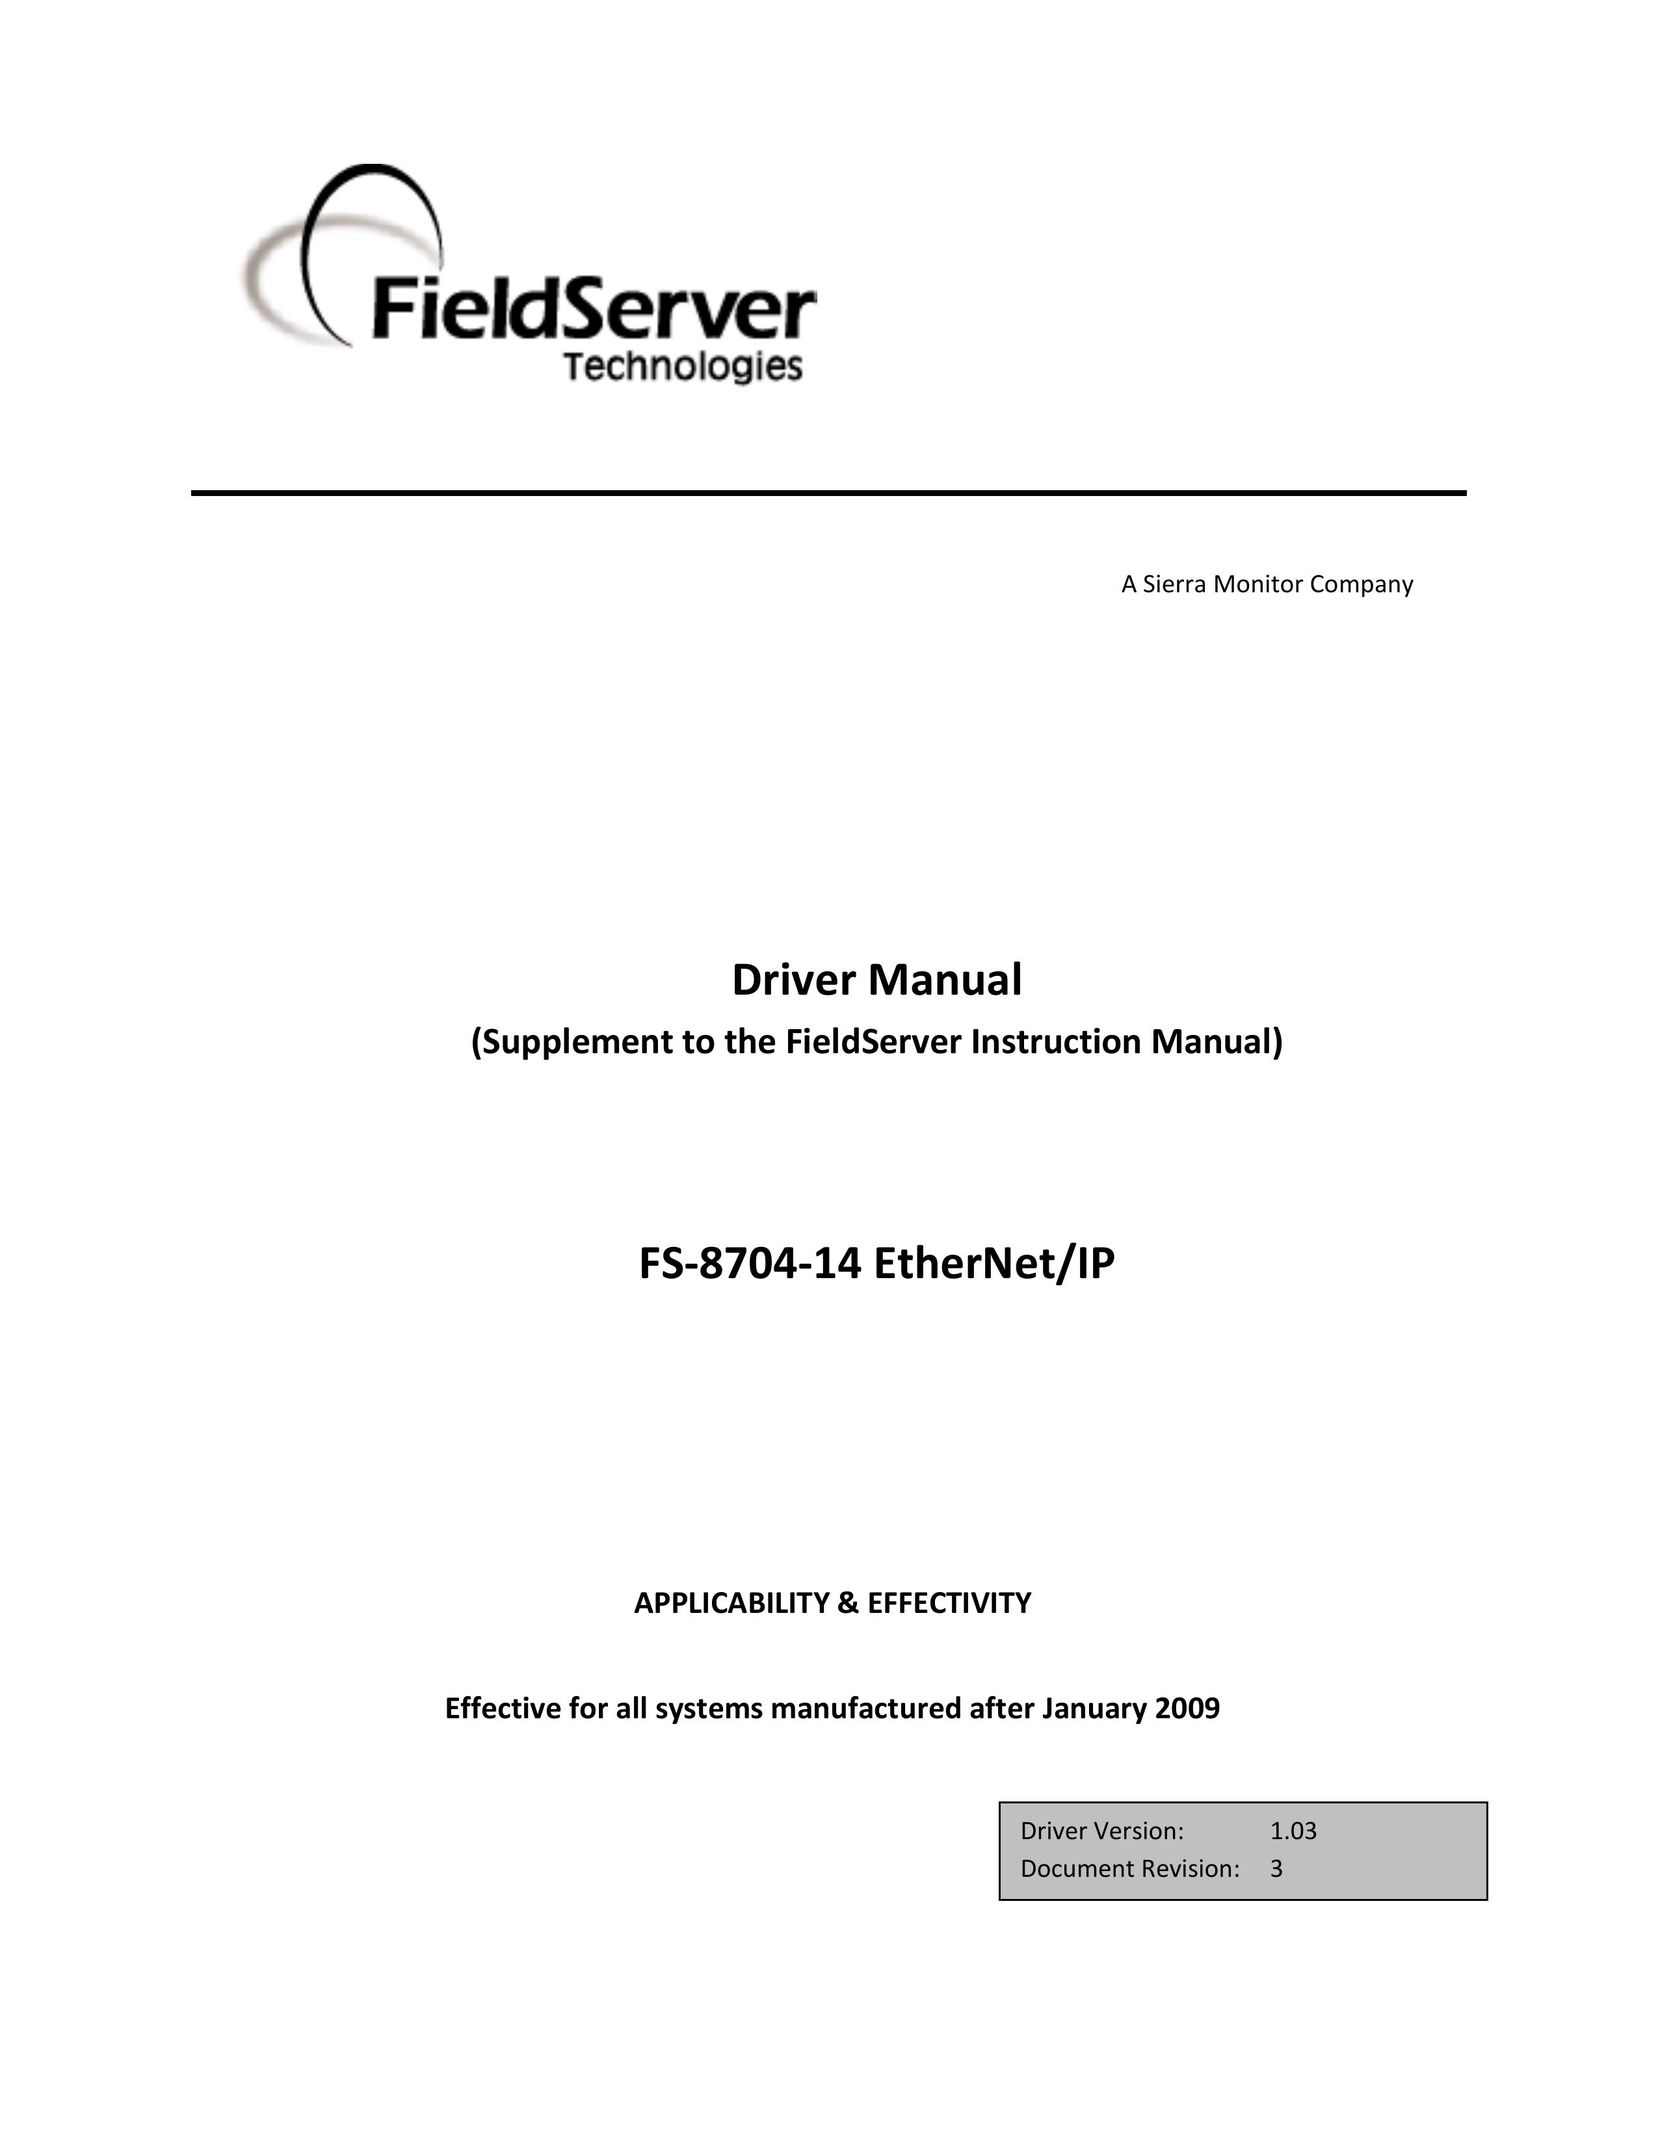 FieldServer FS-8704-14 Network Router User Manual